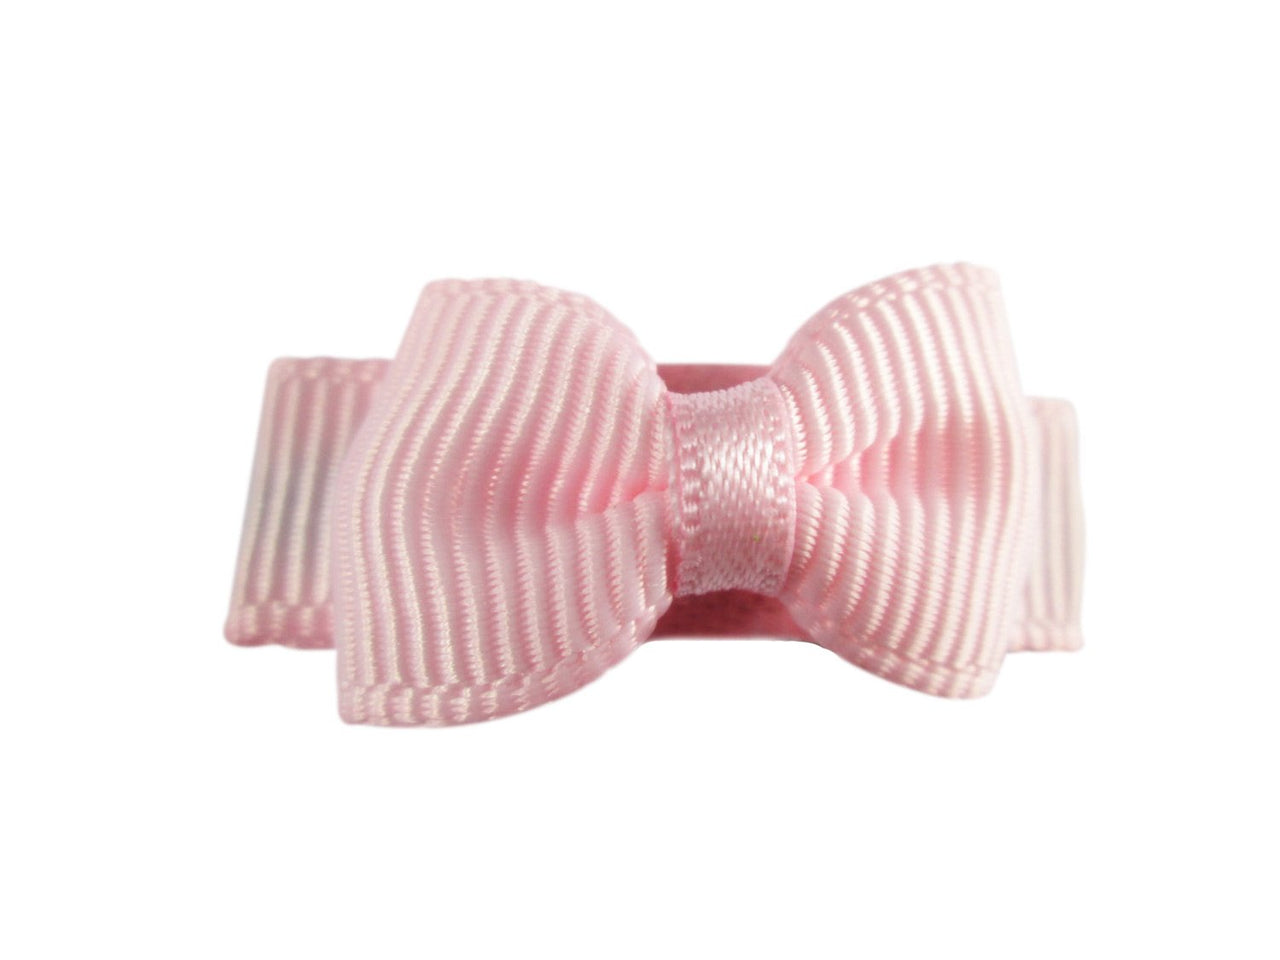 Buy Grosgrain Tux Bow Snaps for $4.95 at BabyWisp.com